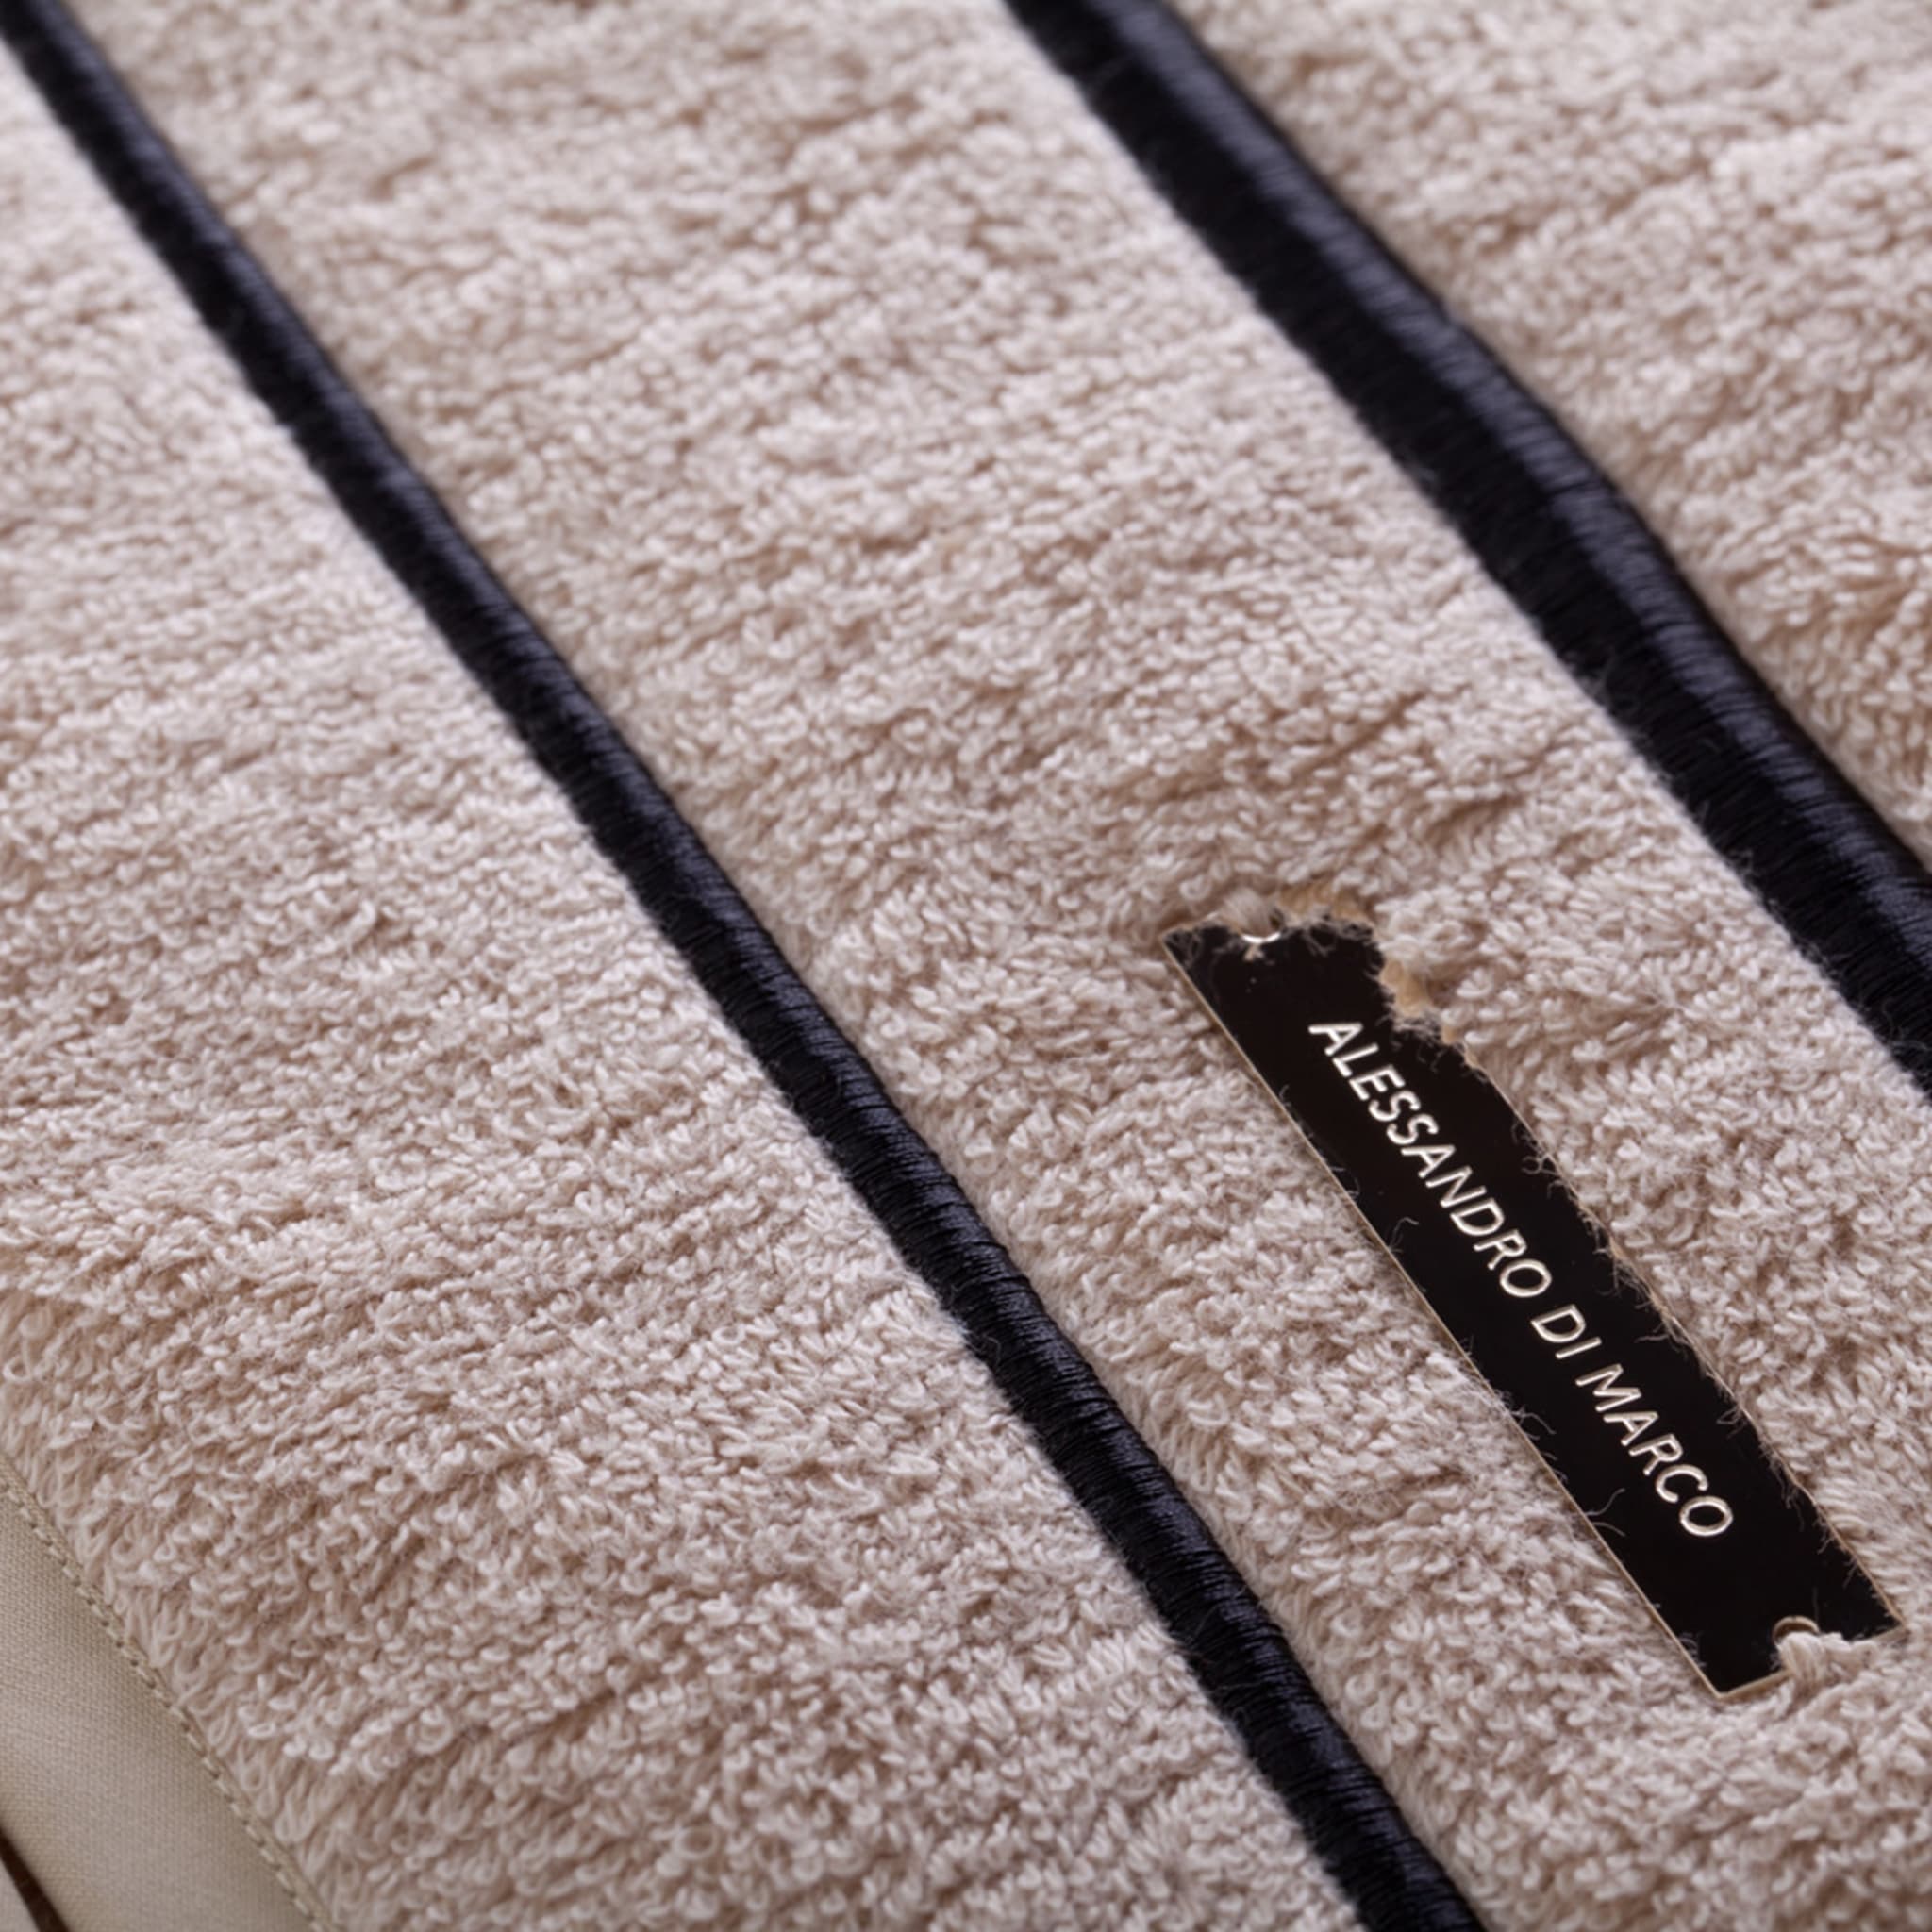 Large Bath Towel Set - Black and Beige - Alternative view 1